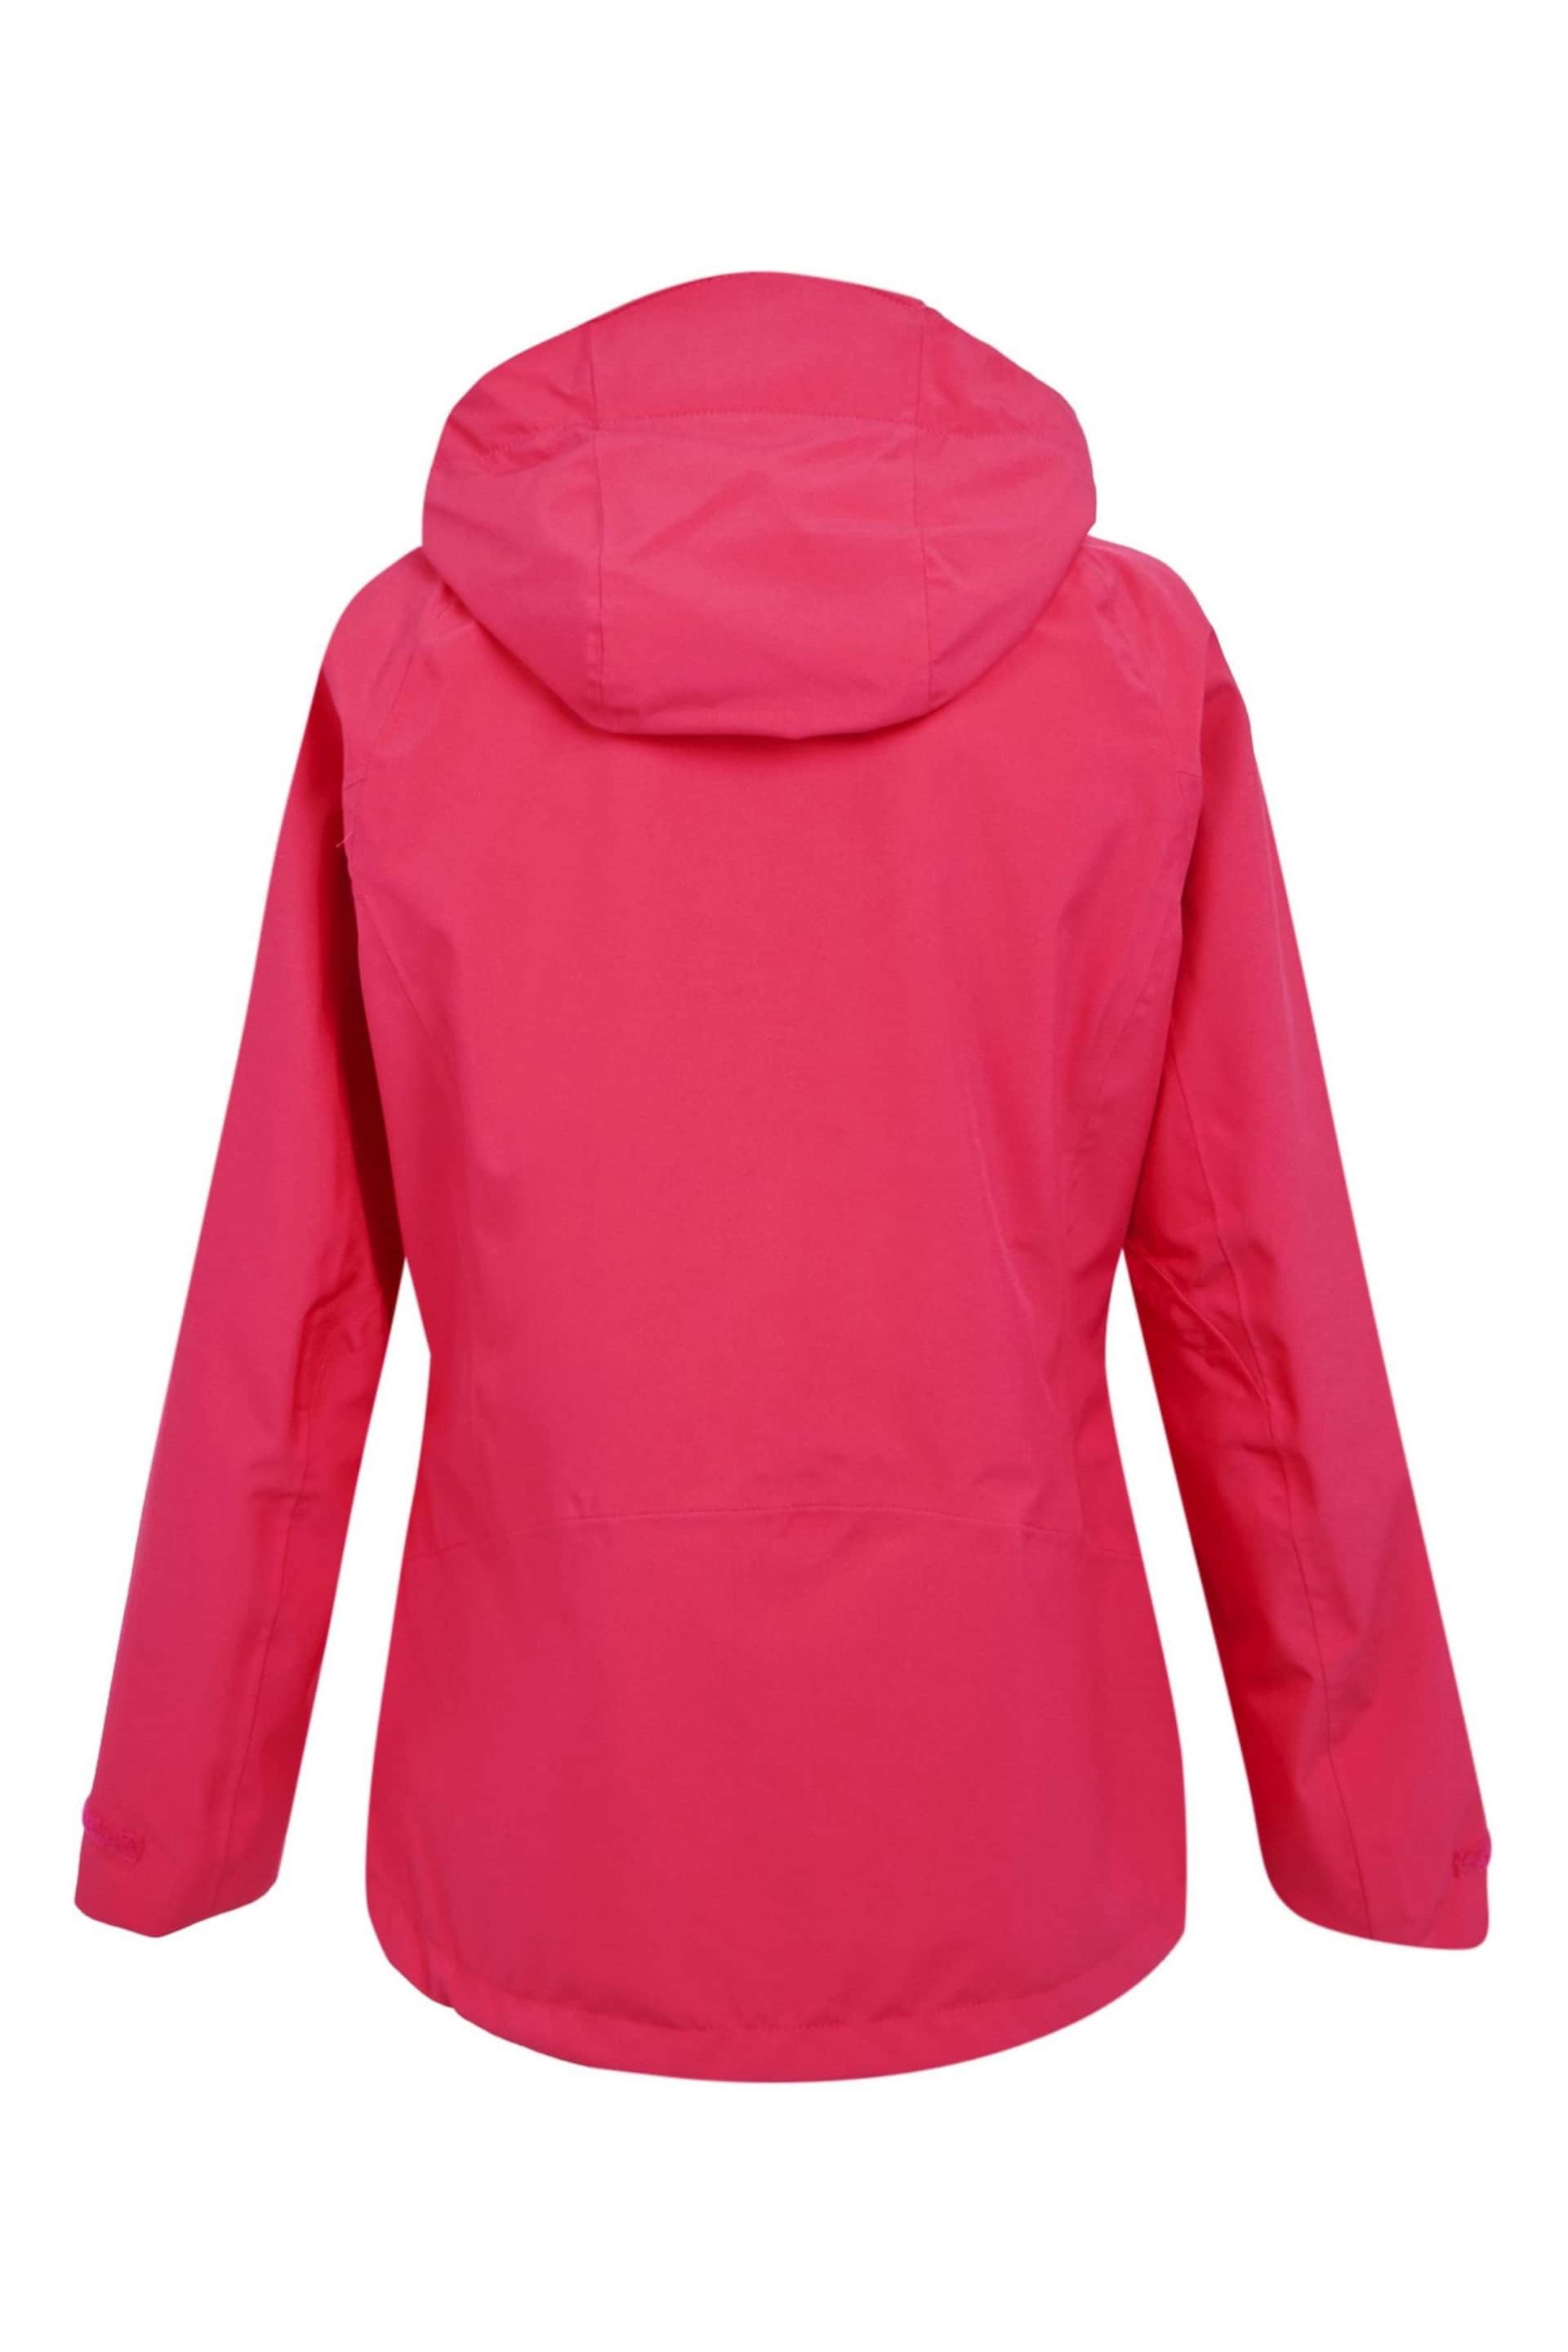 Regatta Pink Birchdale Waterproof Jacket - Image 8 of 8